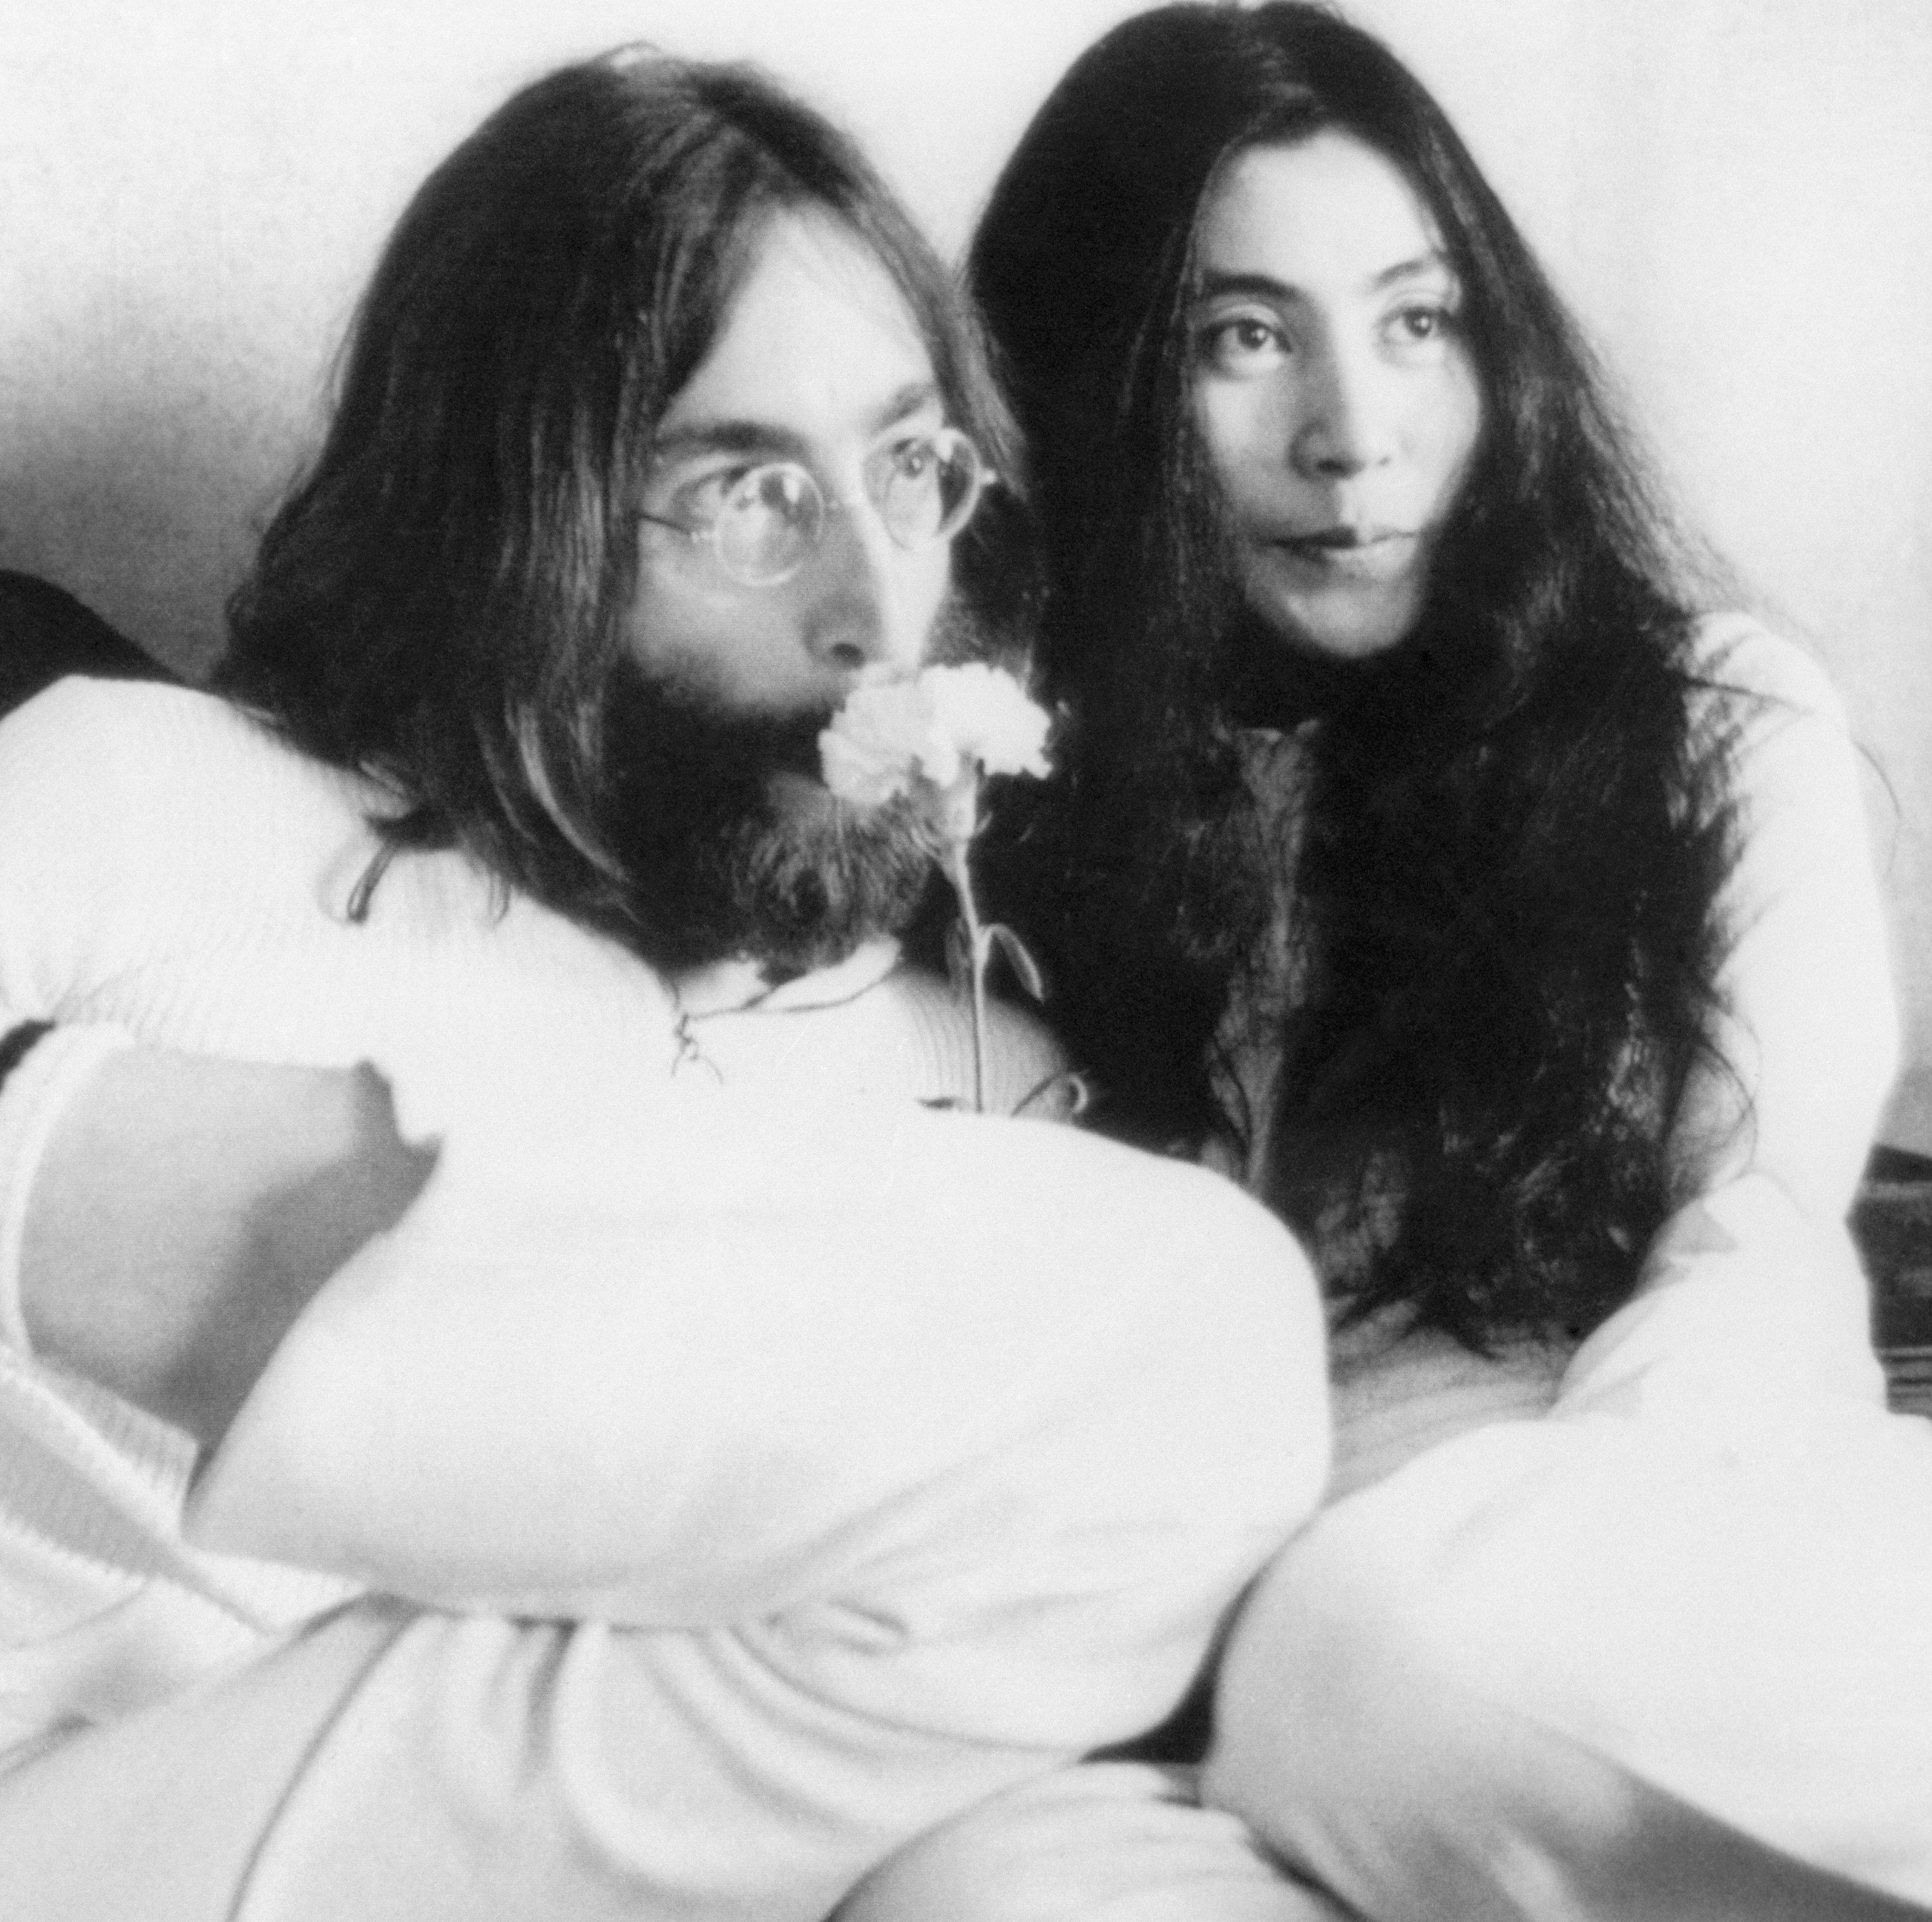 John Lennon and Yoko Ono in black-and-white